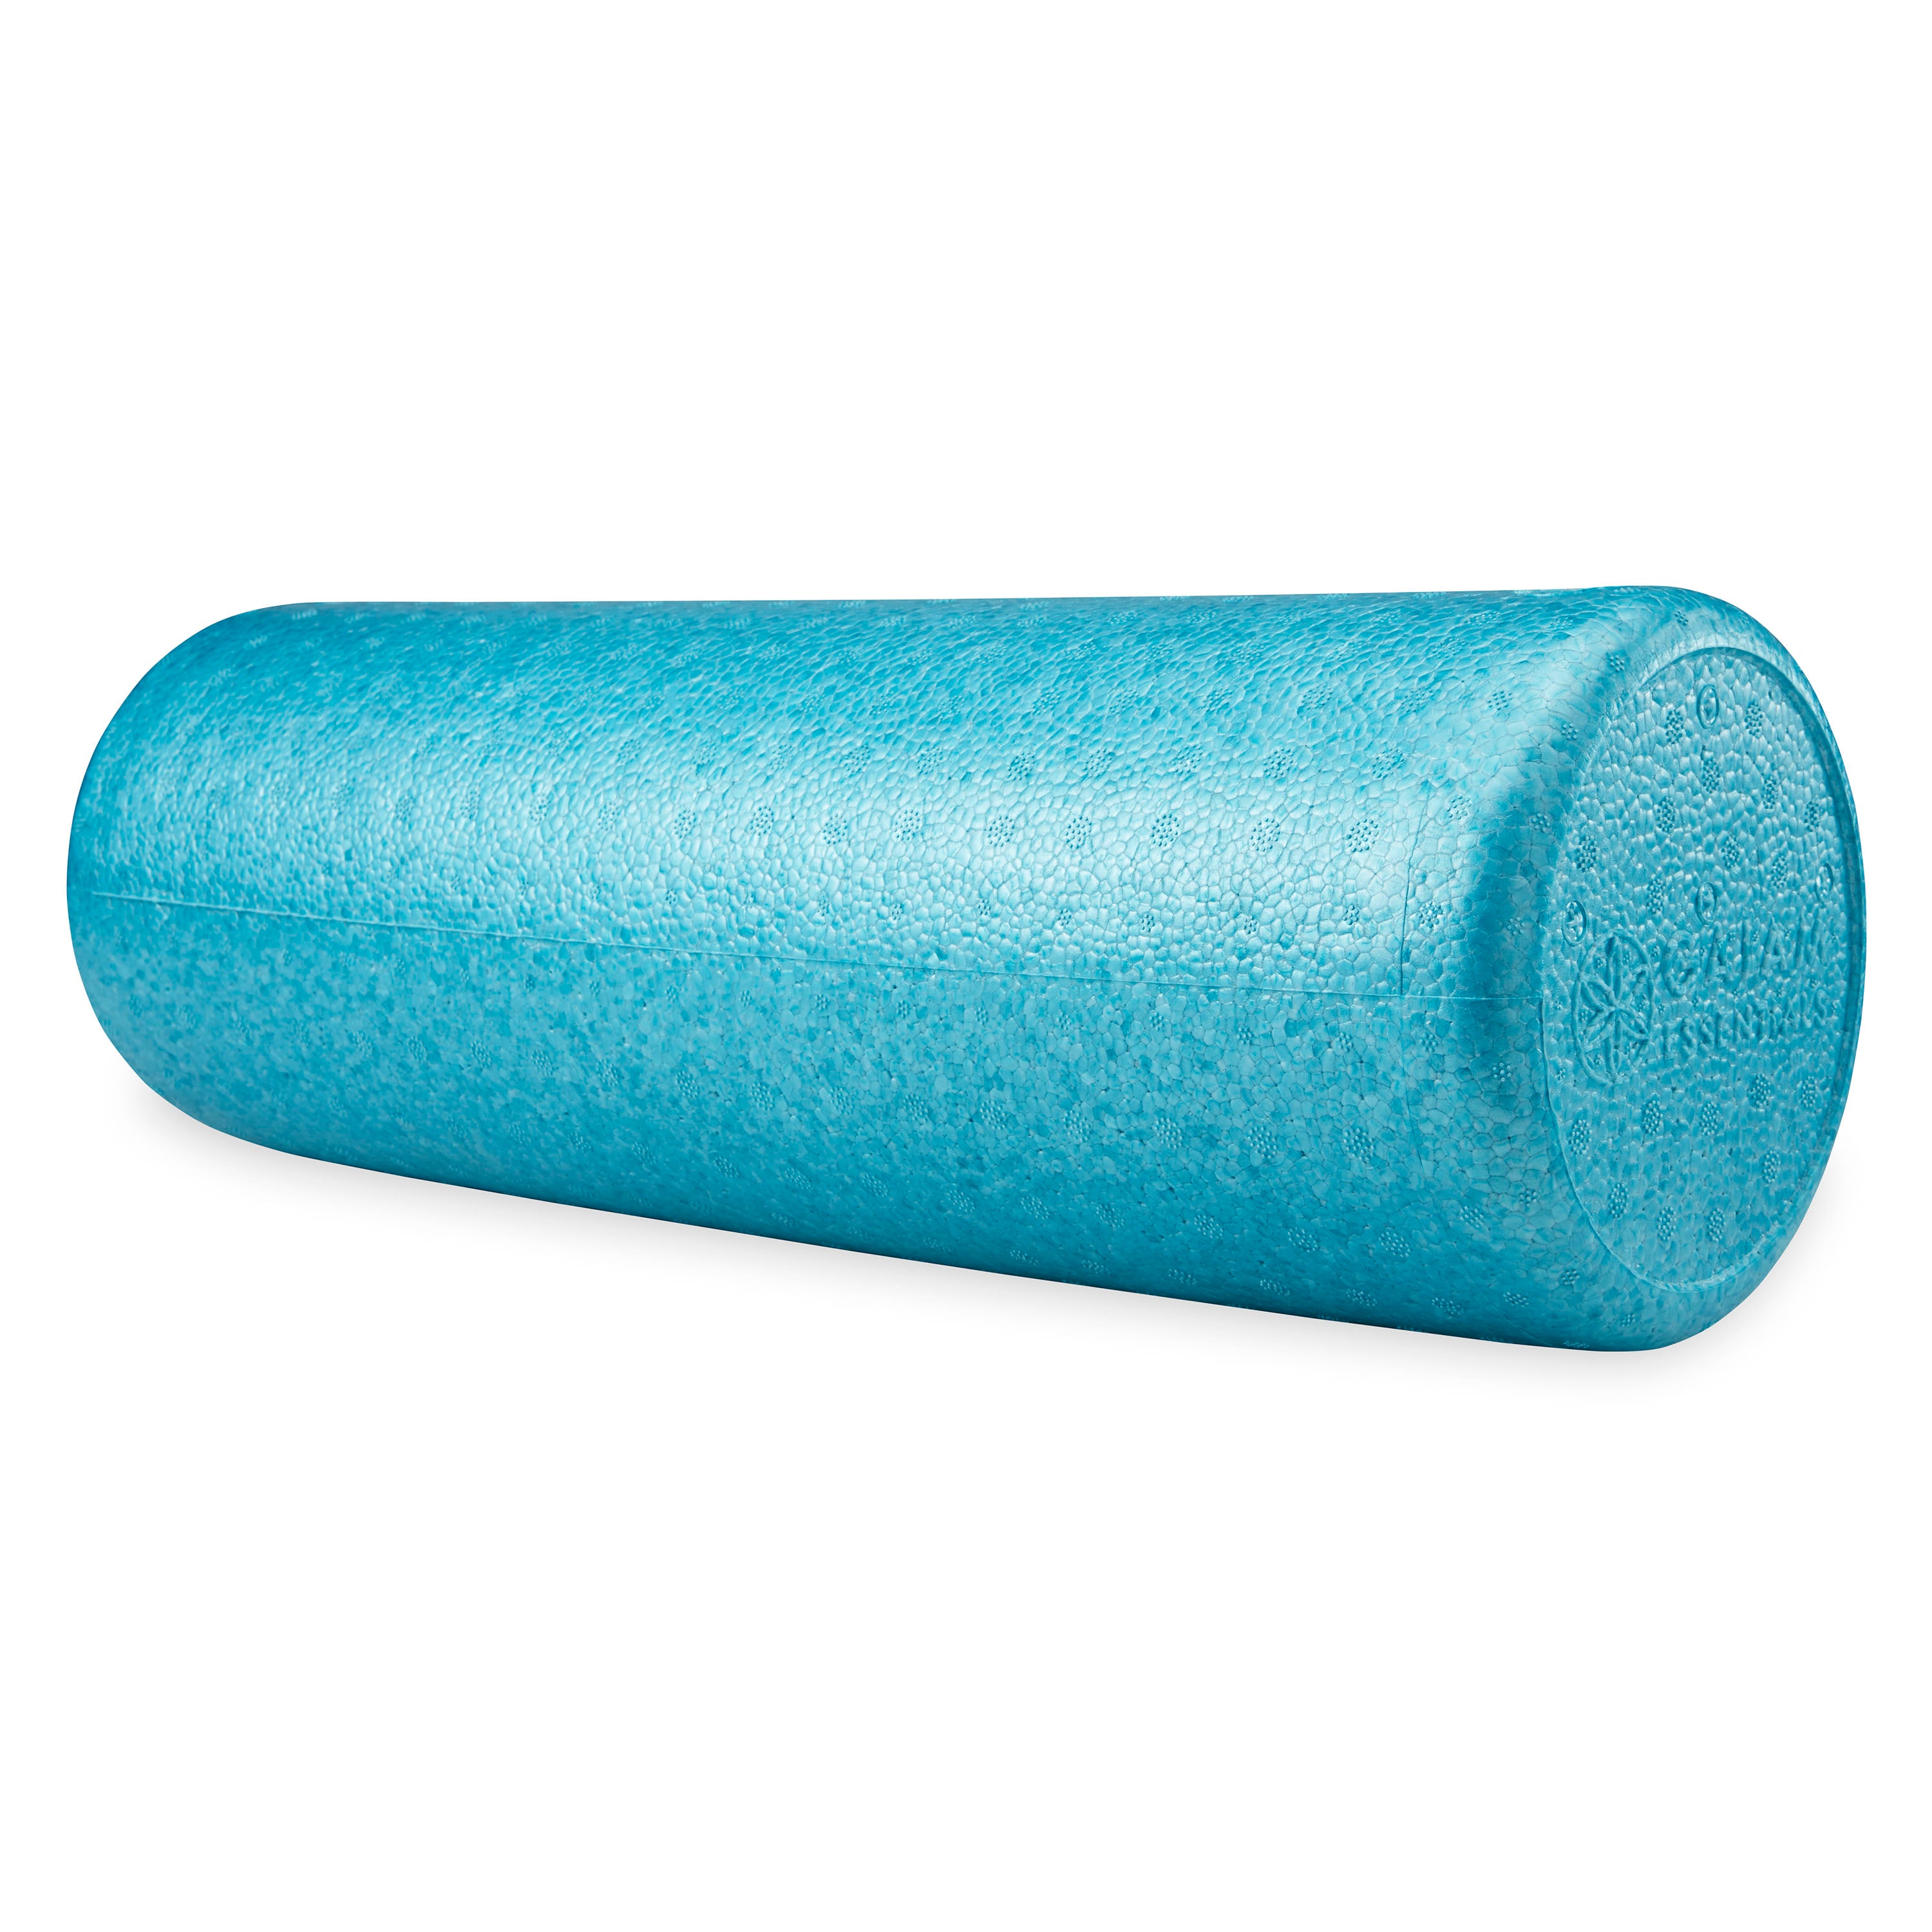 Typisch Buitenland comfort Essentials High-Density Foam Roller (18") - Gaiam